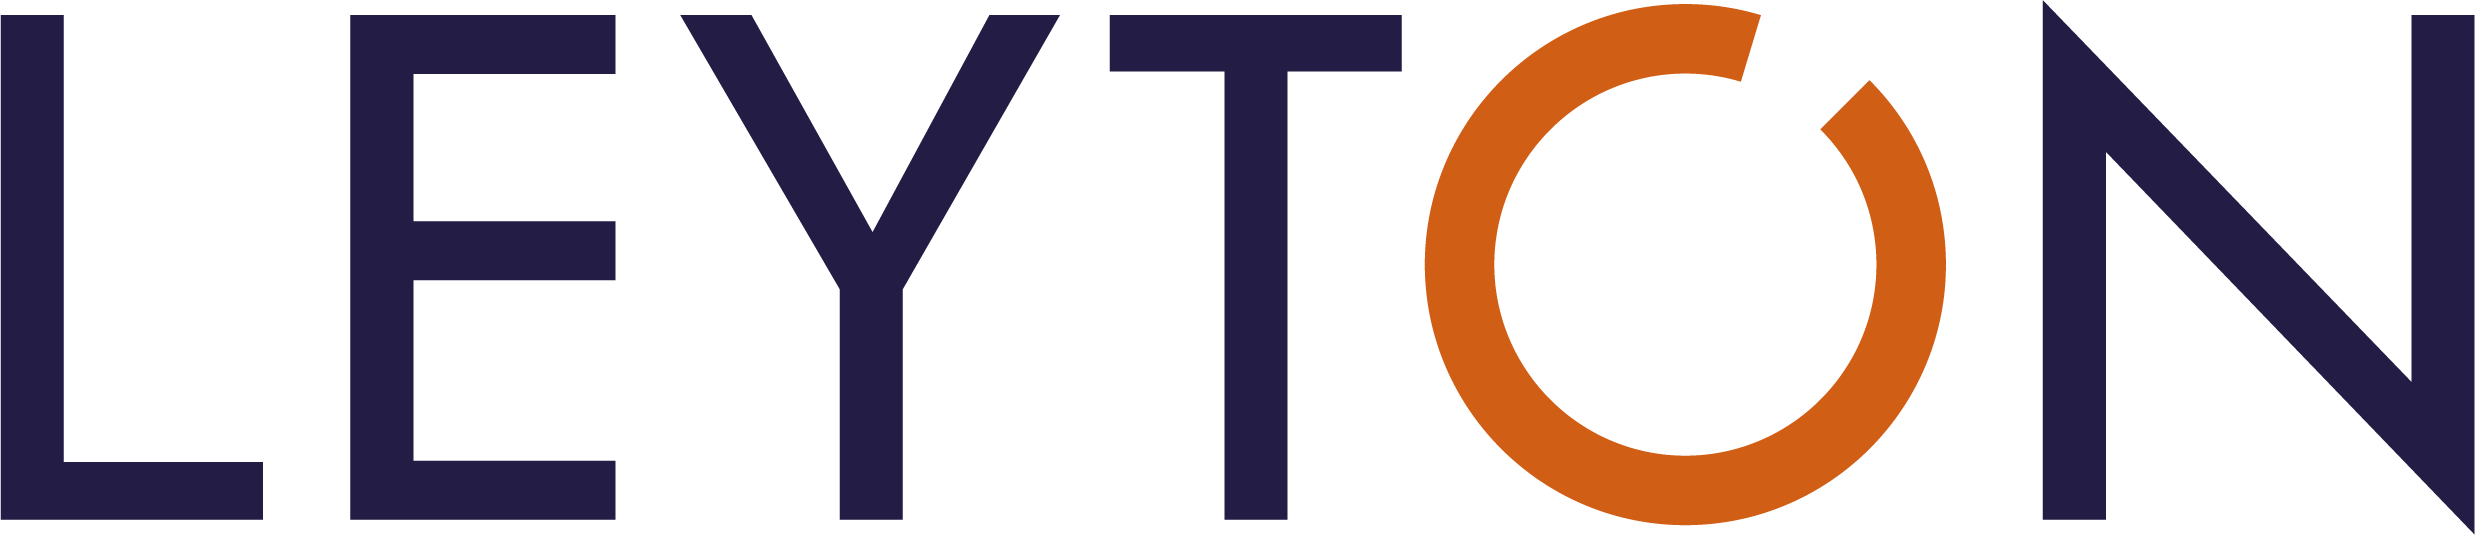 Logo-Final-LEYTON